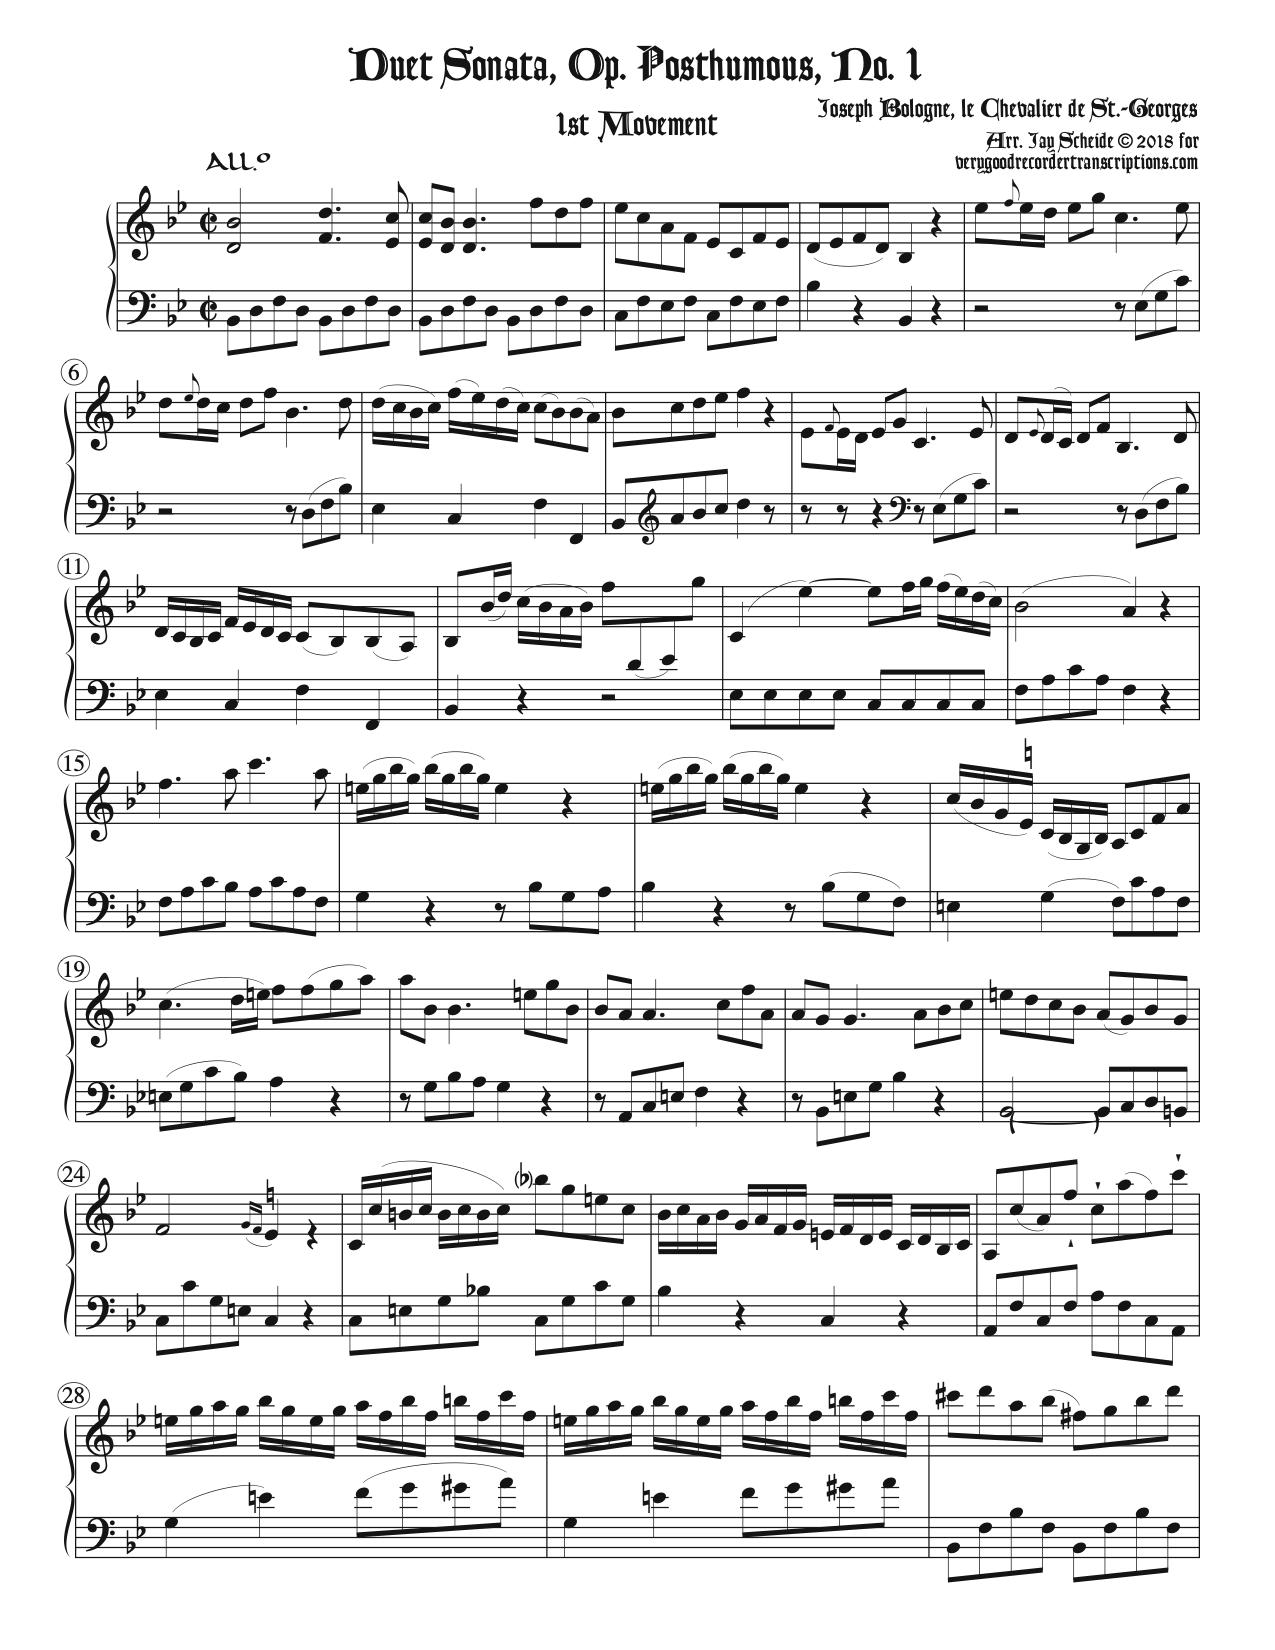 Duet Sonata Op. Posthumous No. 1, two versions